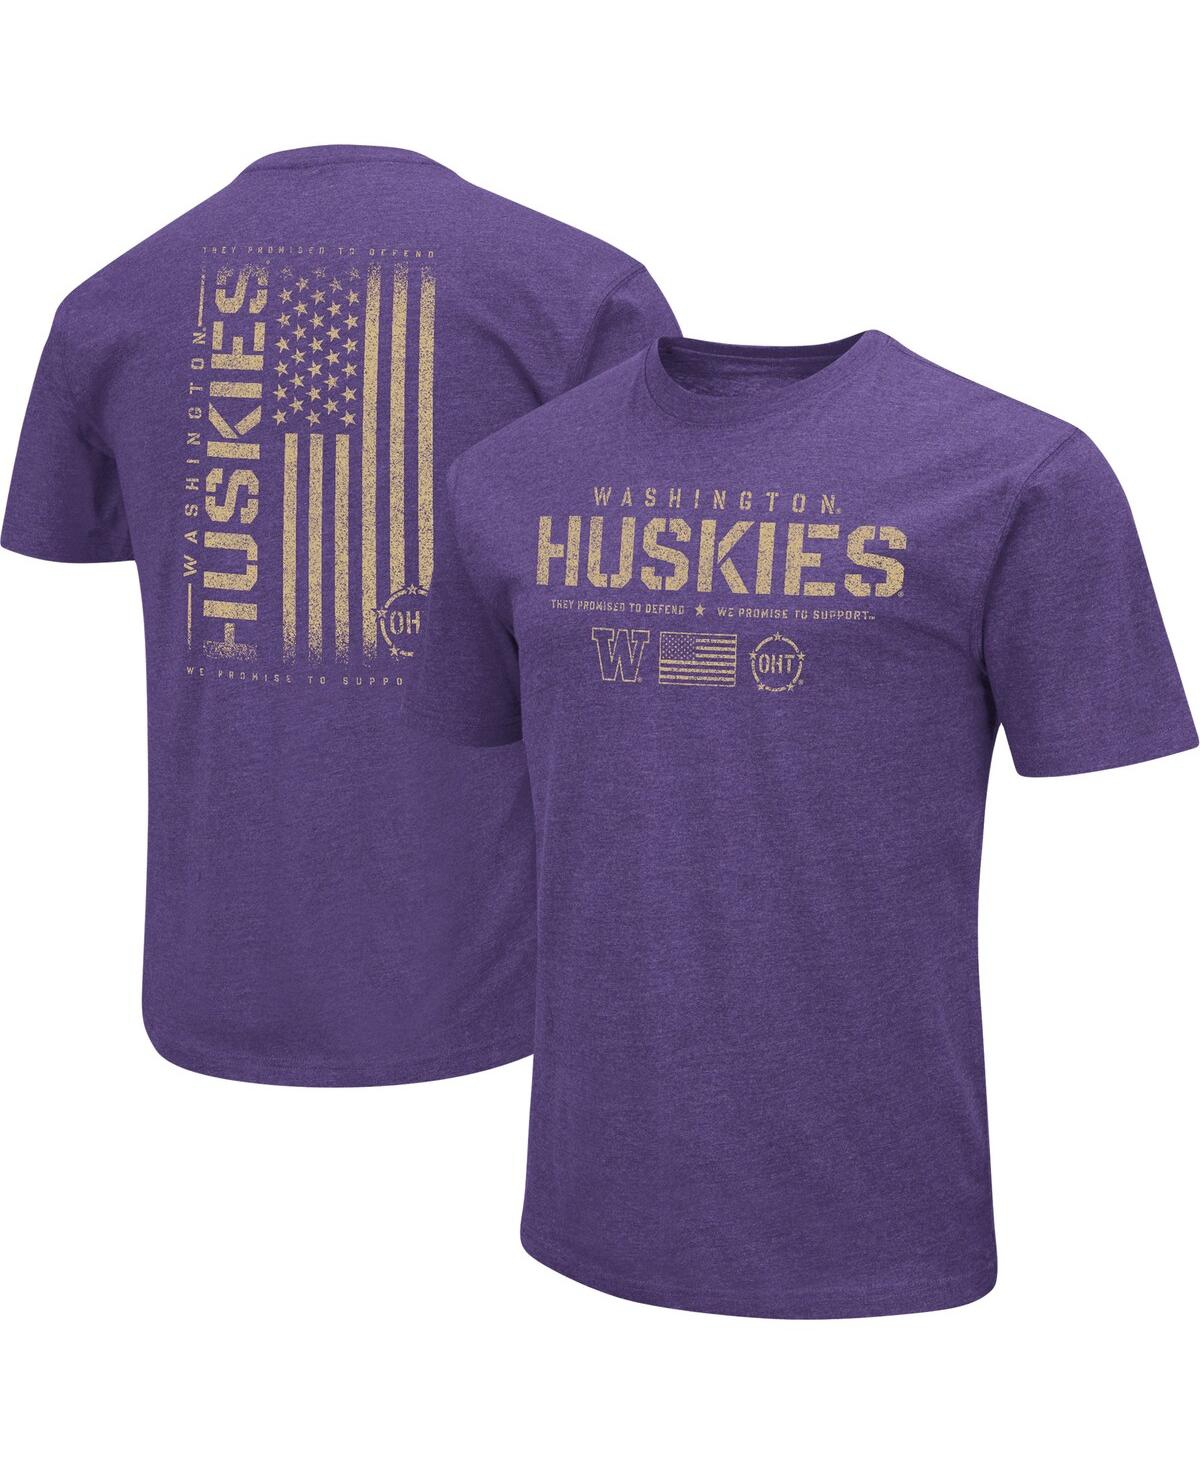 Men's Colosseum Purple Washington Huskies Oht Military-Inspired Appreciation Flag 2.0 T-shirt - Purple